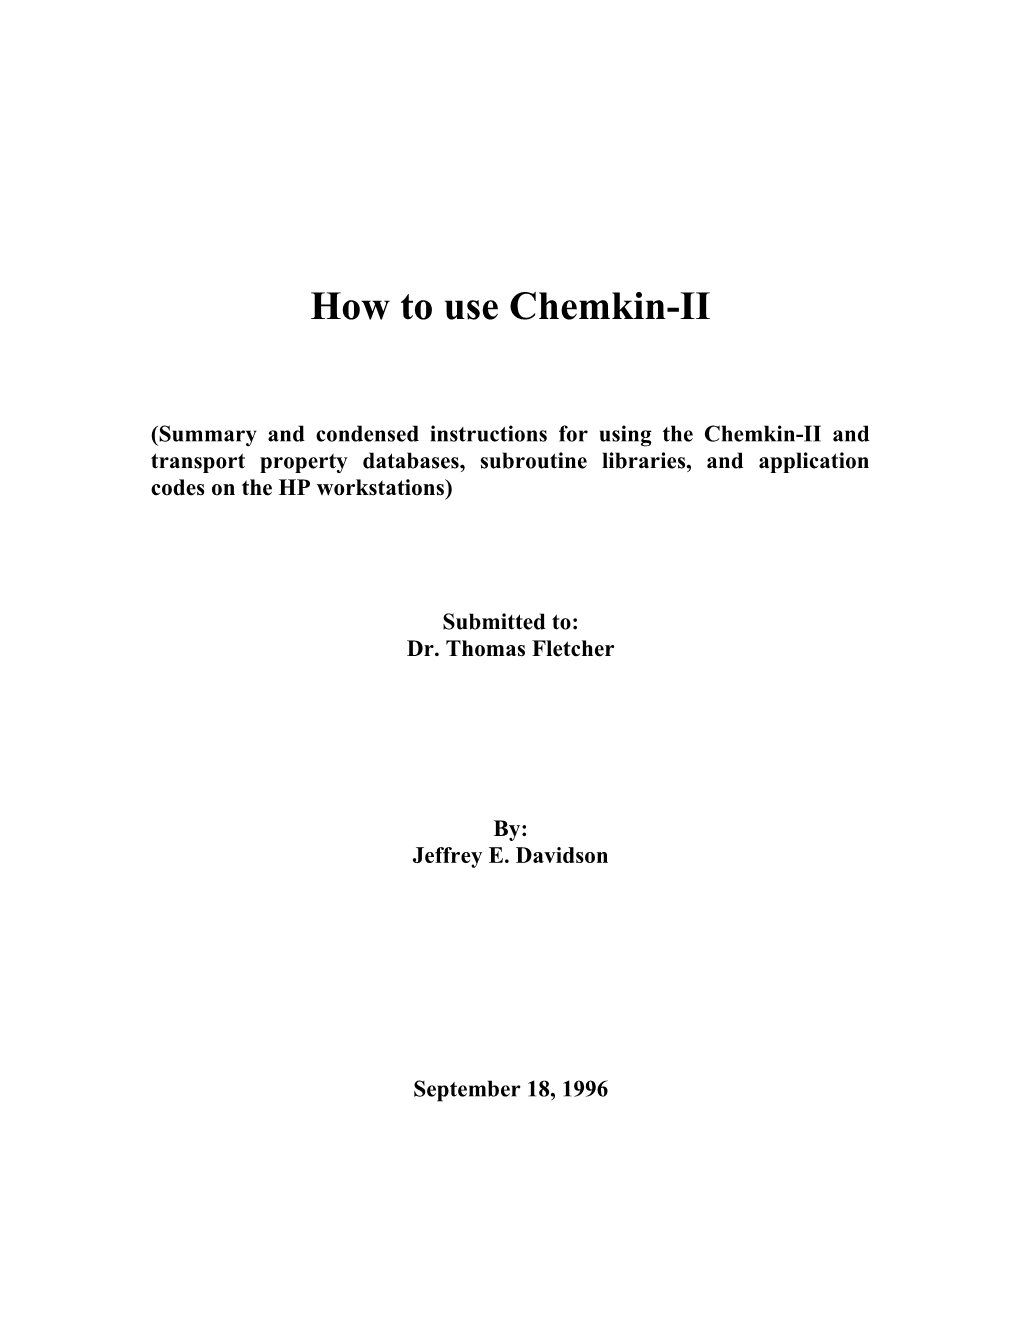 How to Use Chemkin-II